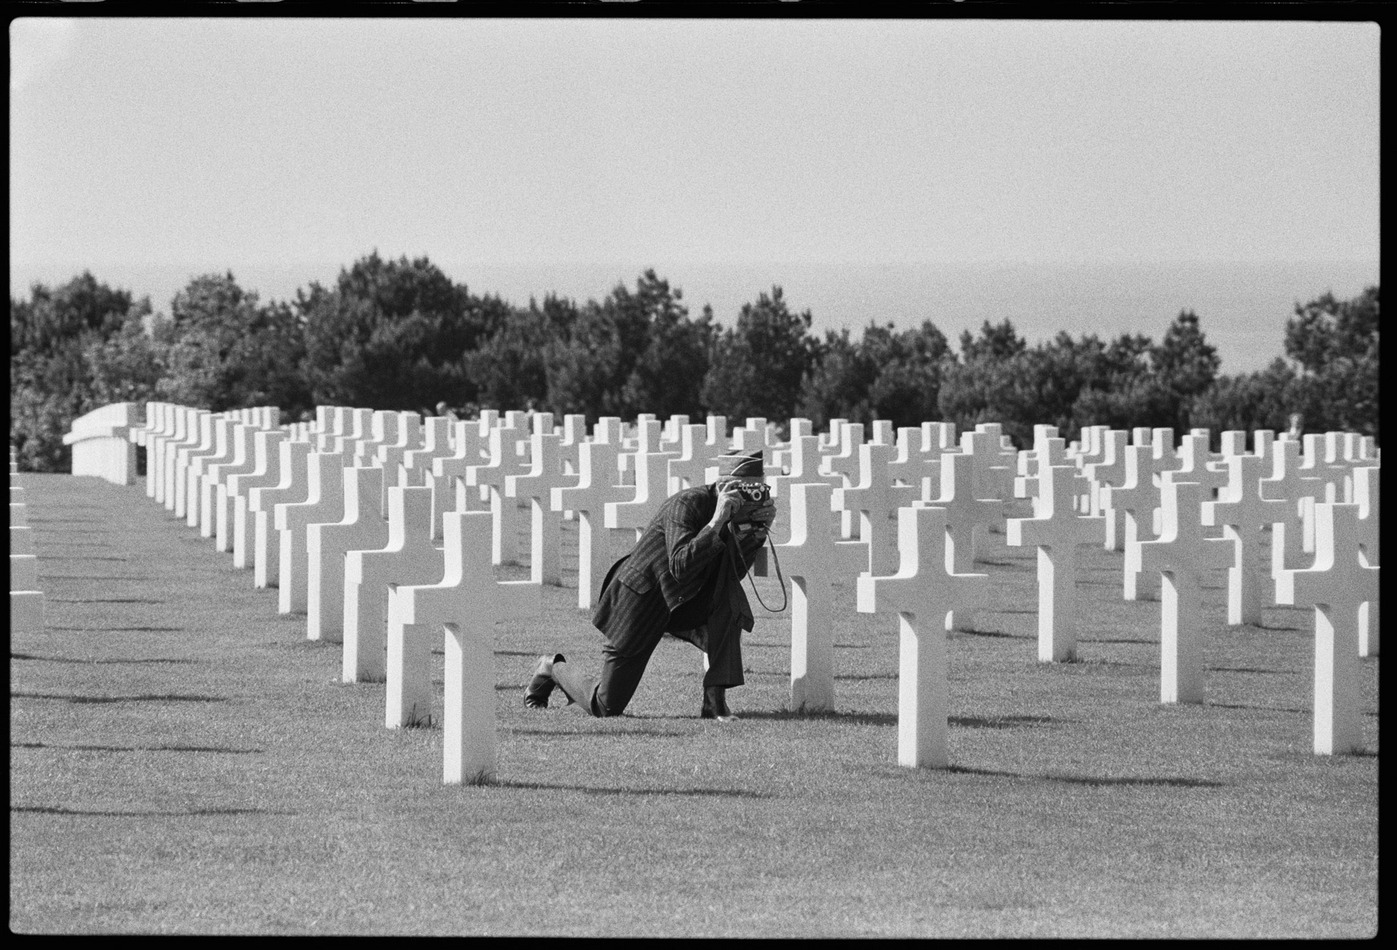 A D-Day veteran photographs a headstone at the Omaha beach cemetary, Normandy 1979 : Too Close UMFA : David Burnett | Photographer